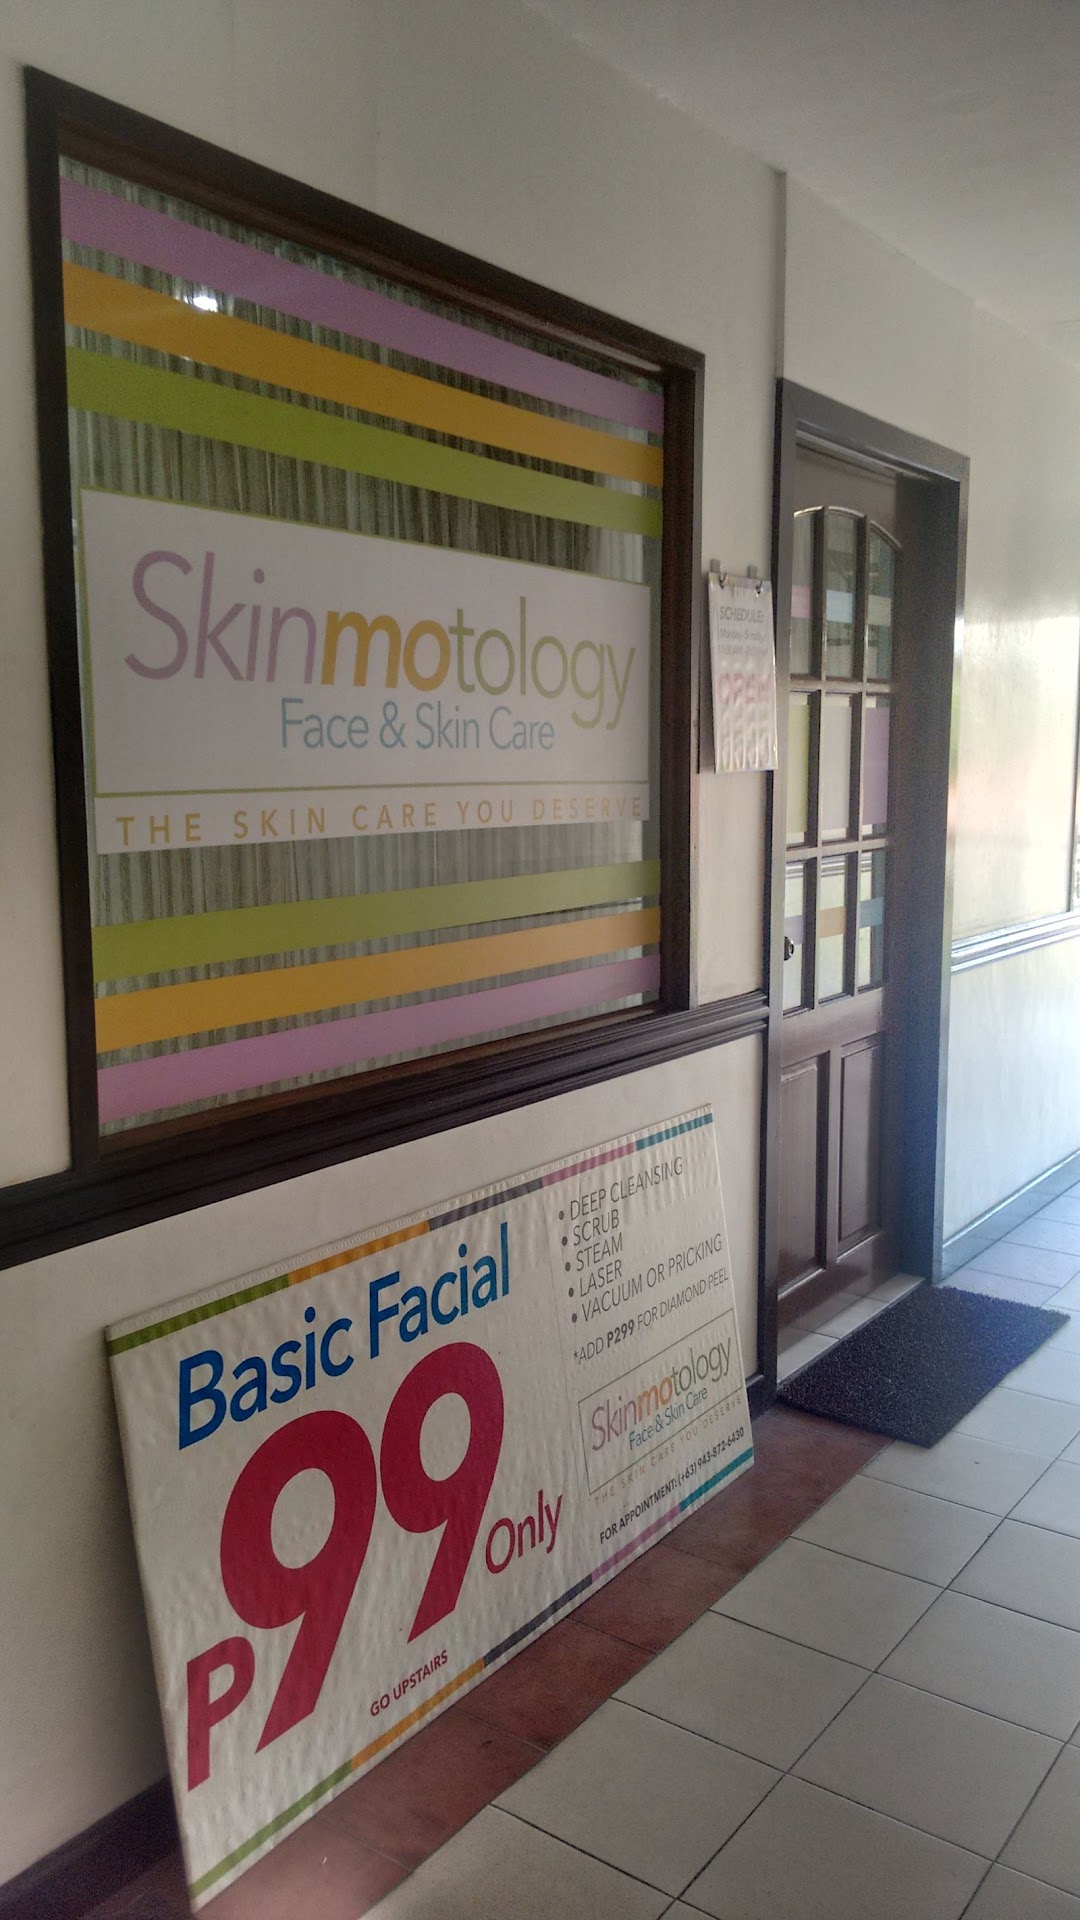 Skin Motology Face & Skin Care